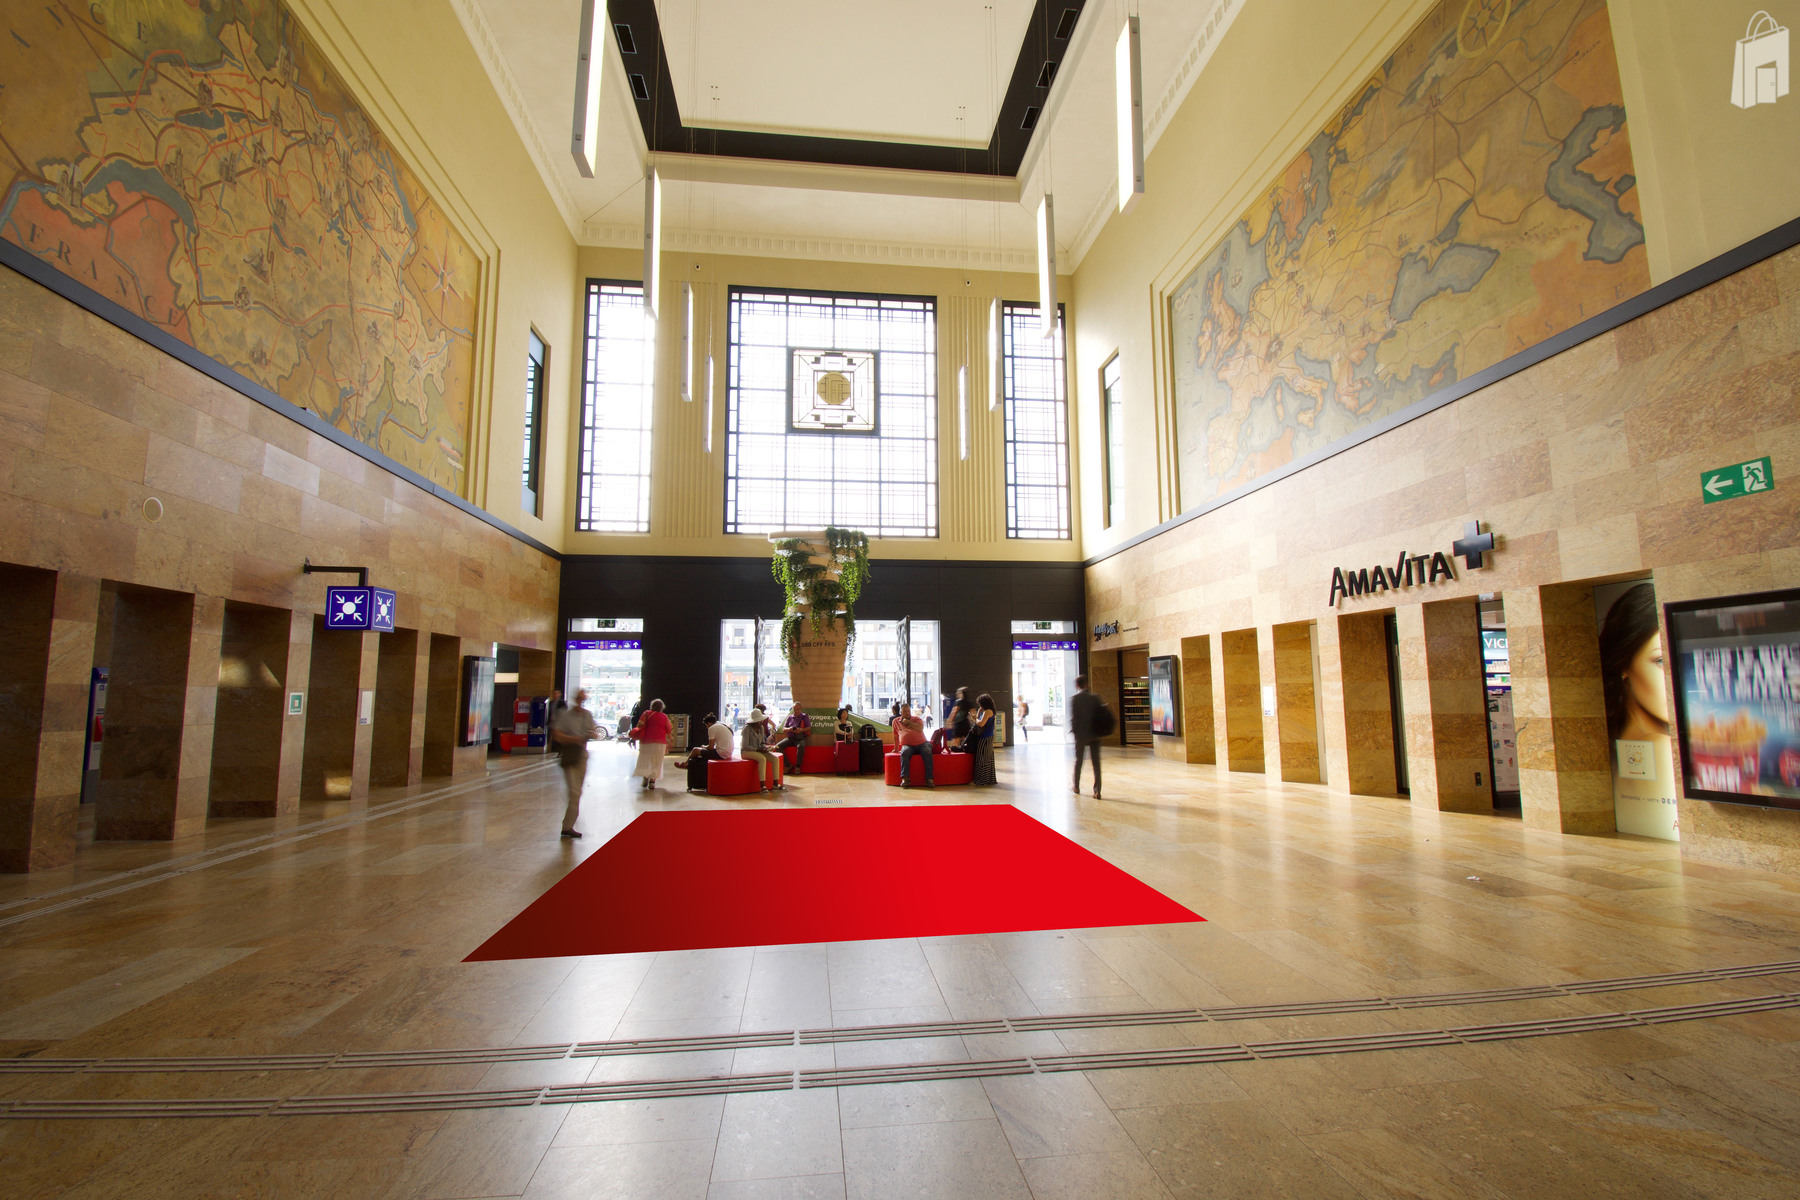 Promotionsfläche P1 Bahnhof Genf